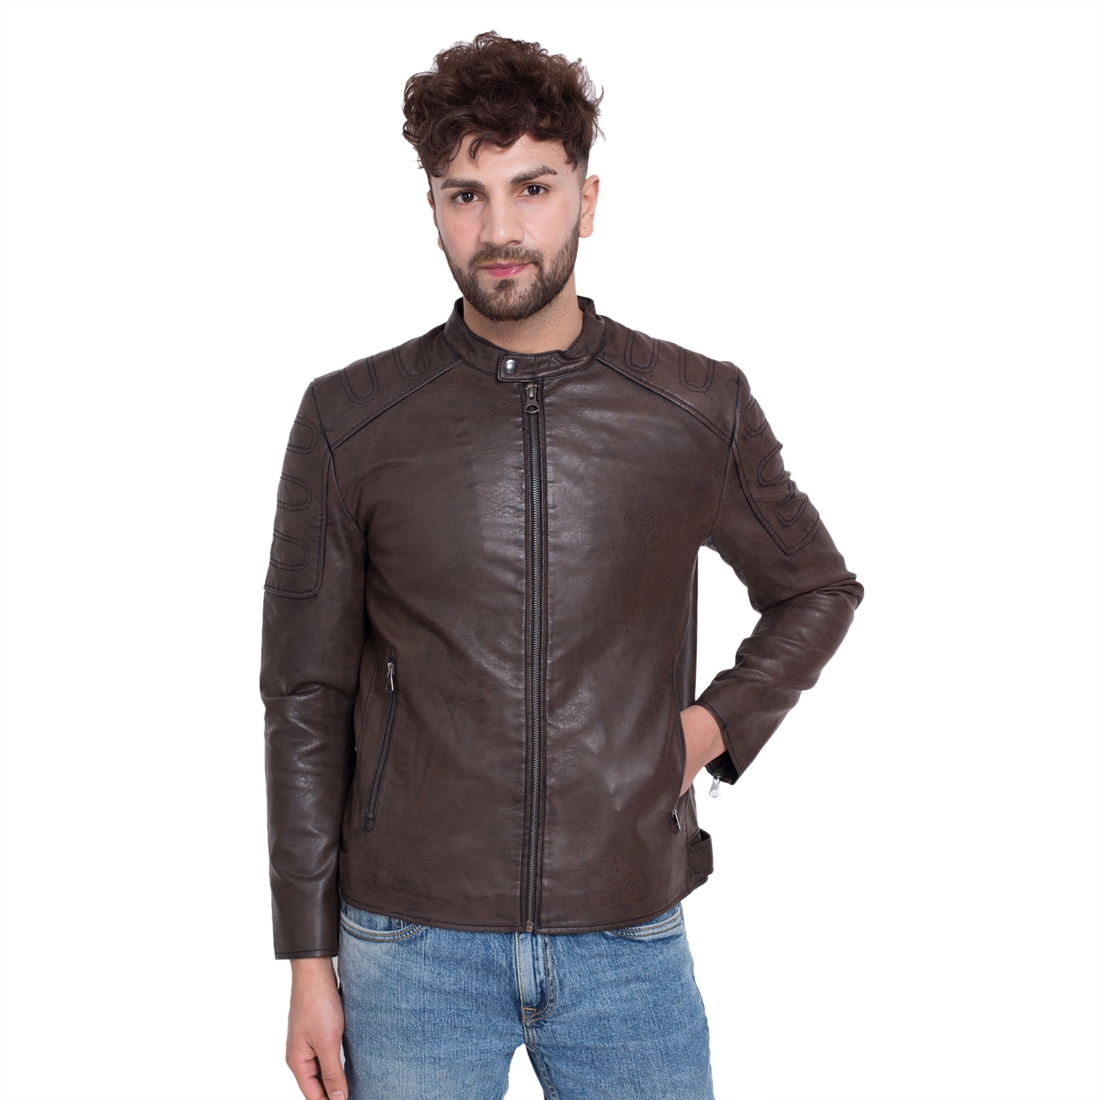 Justanned | Justanned Brunette Leather Jacket